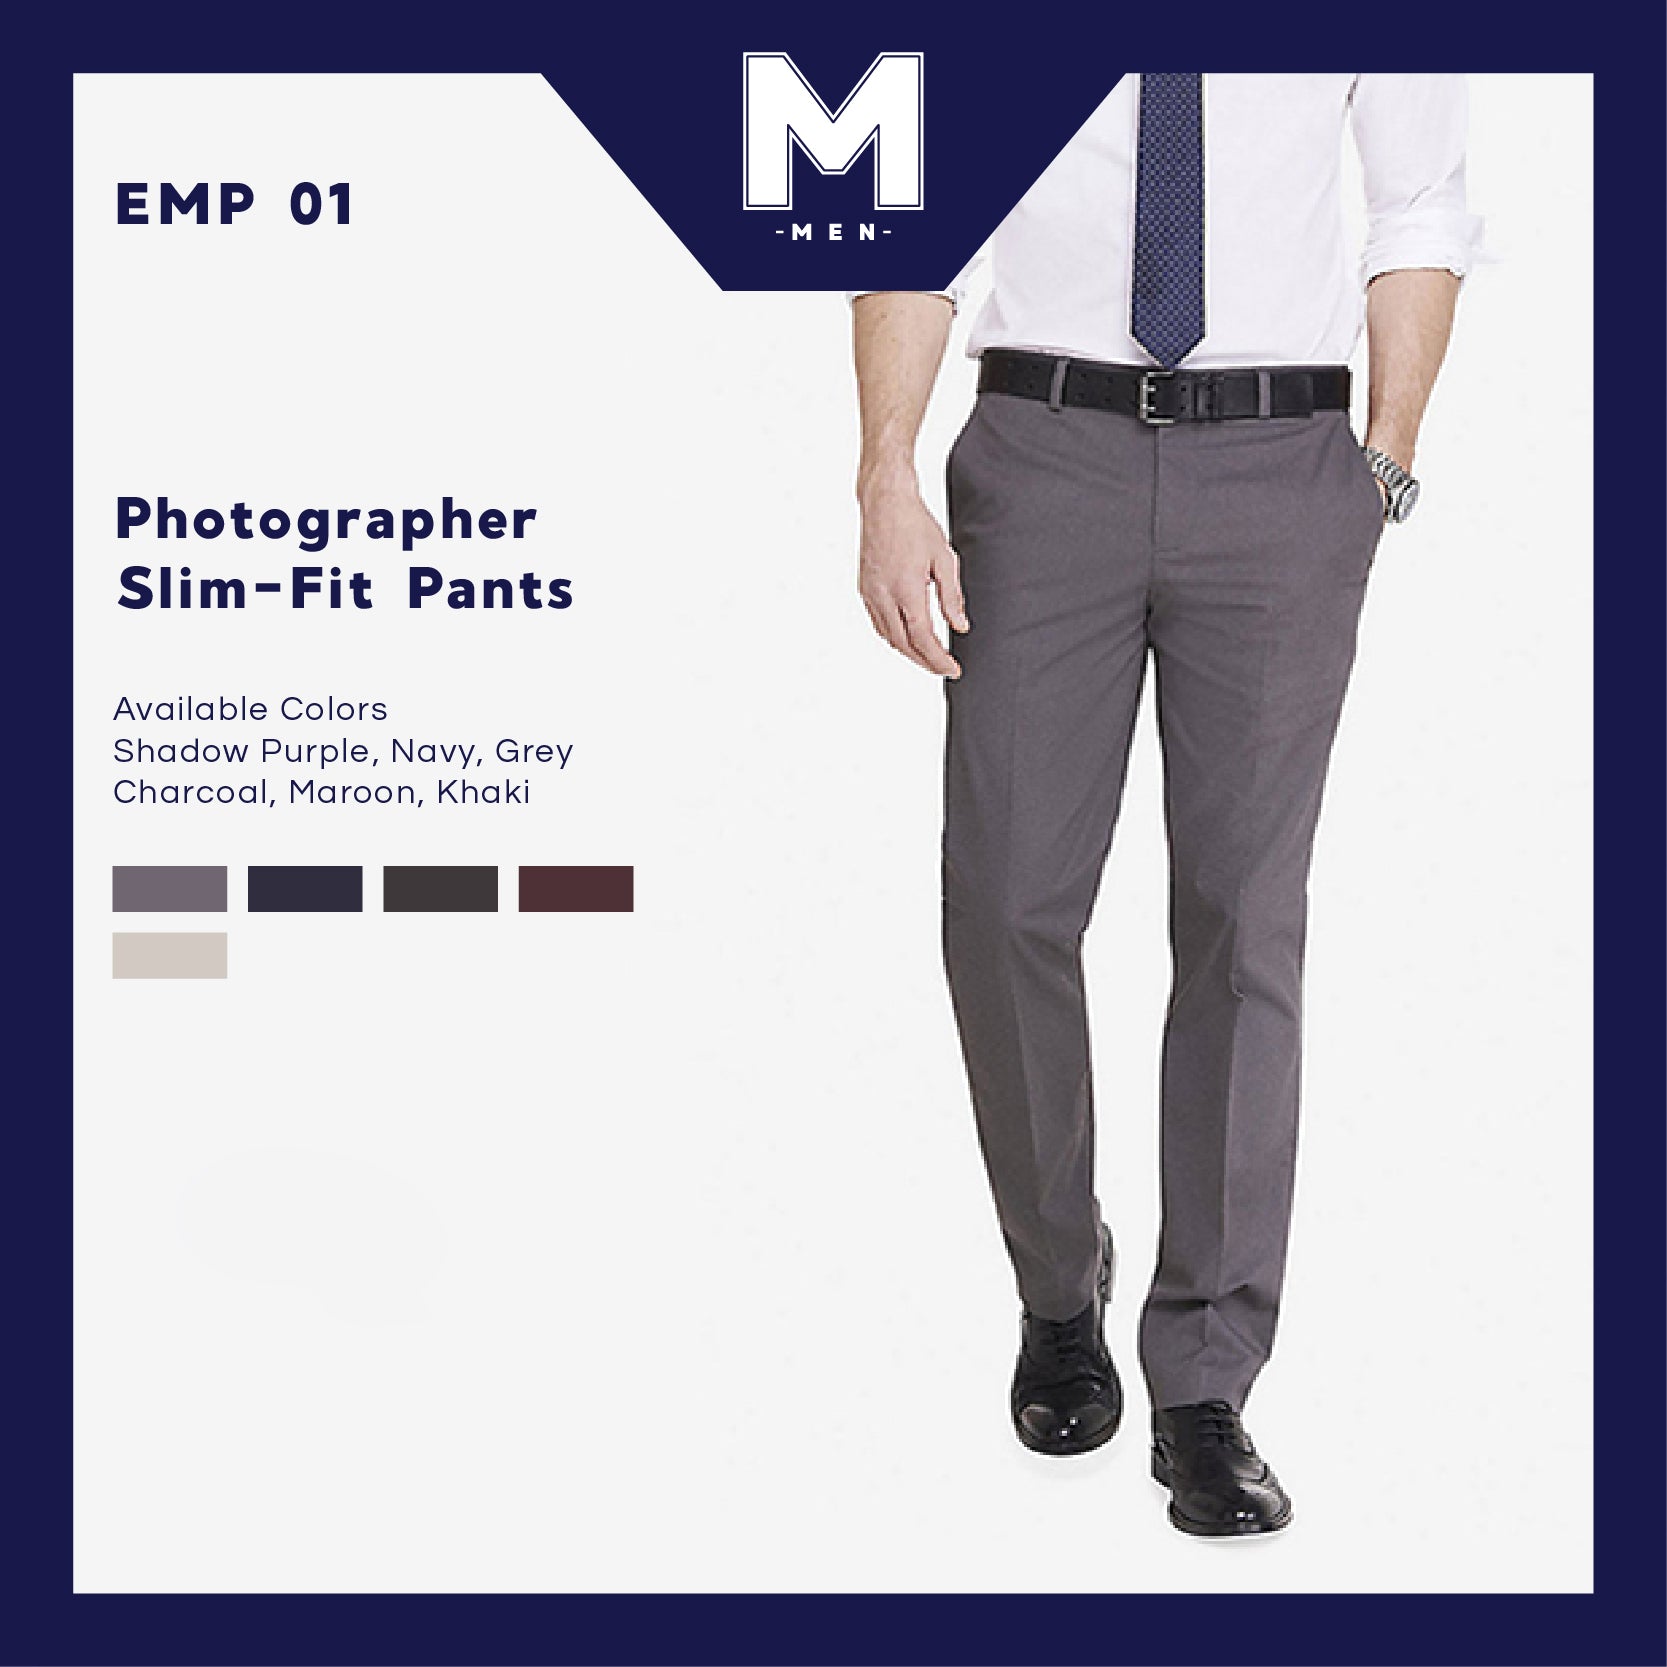 Express Celana Kerja Pria Branded - Photographer Slim Fit Man Pants (EMP 01)